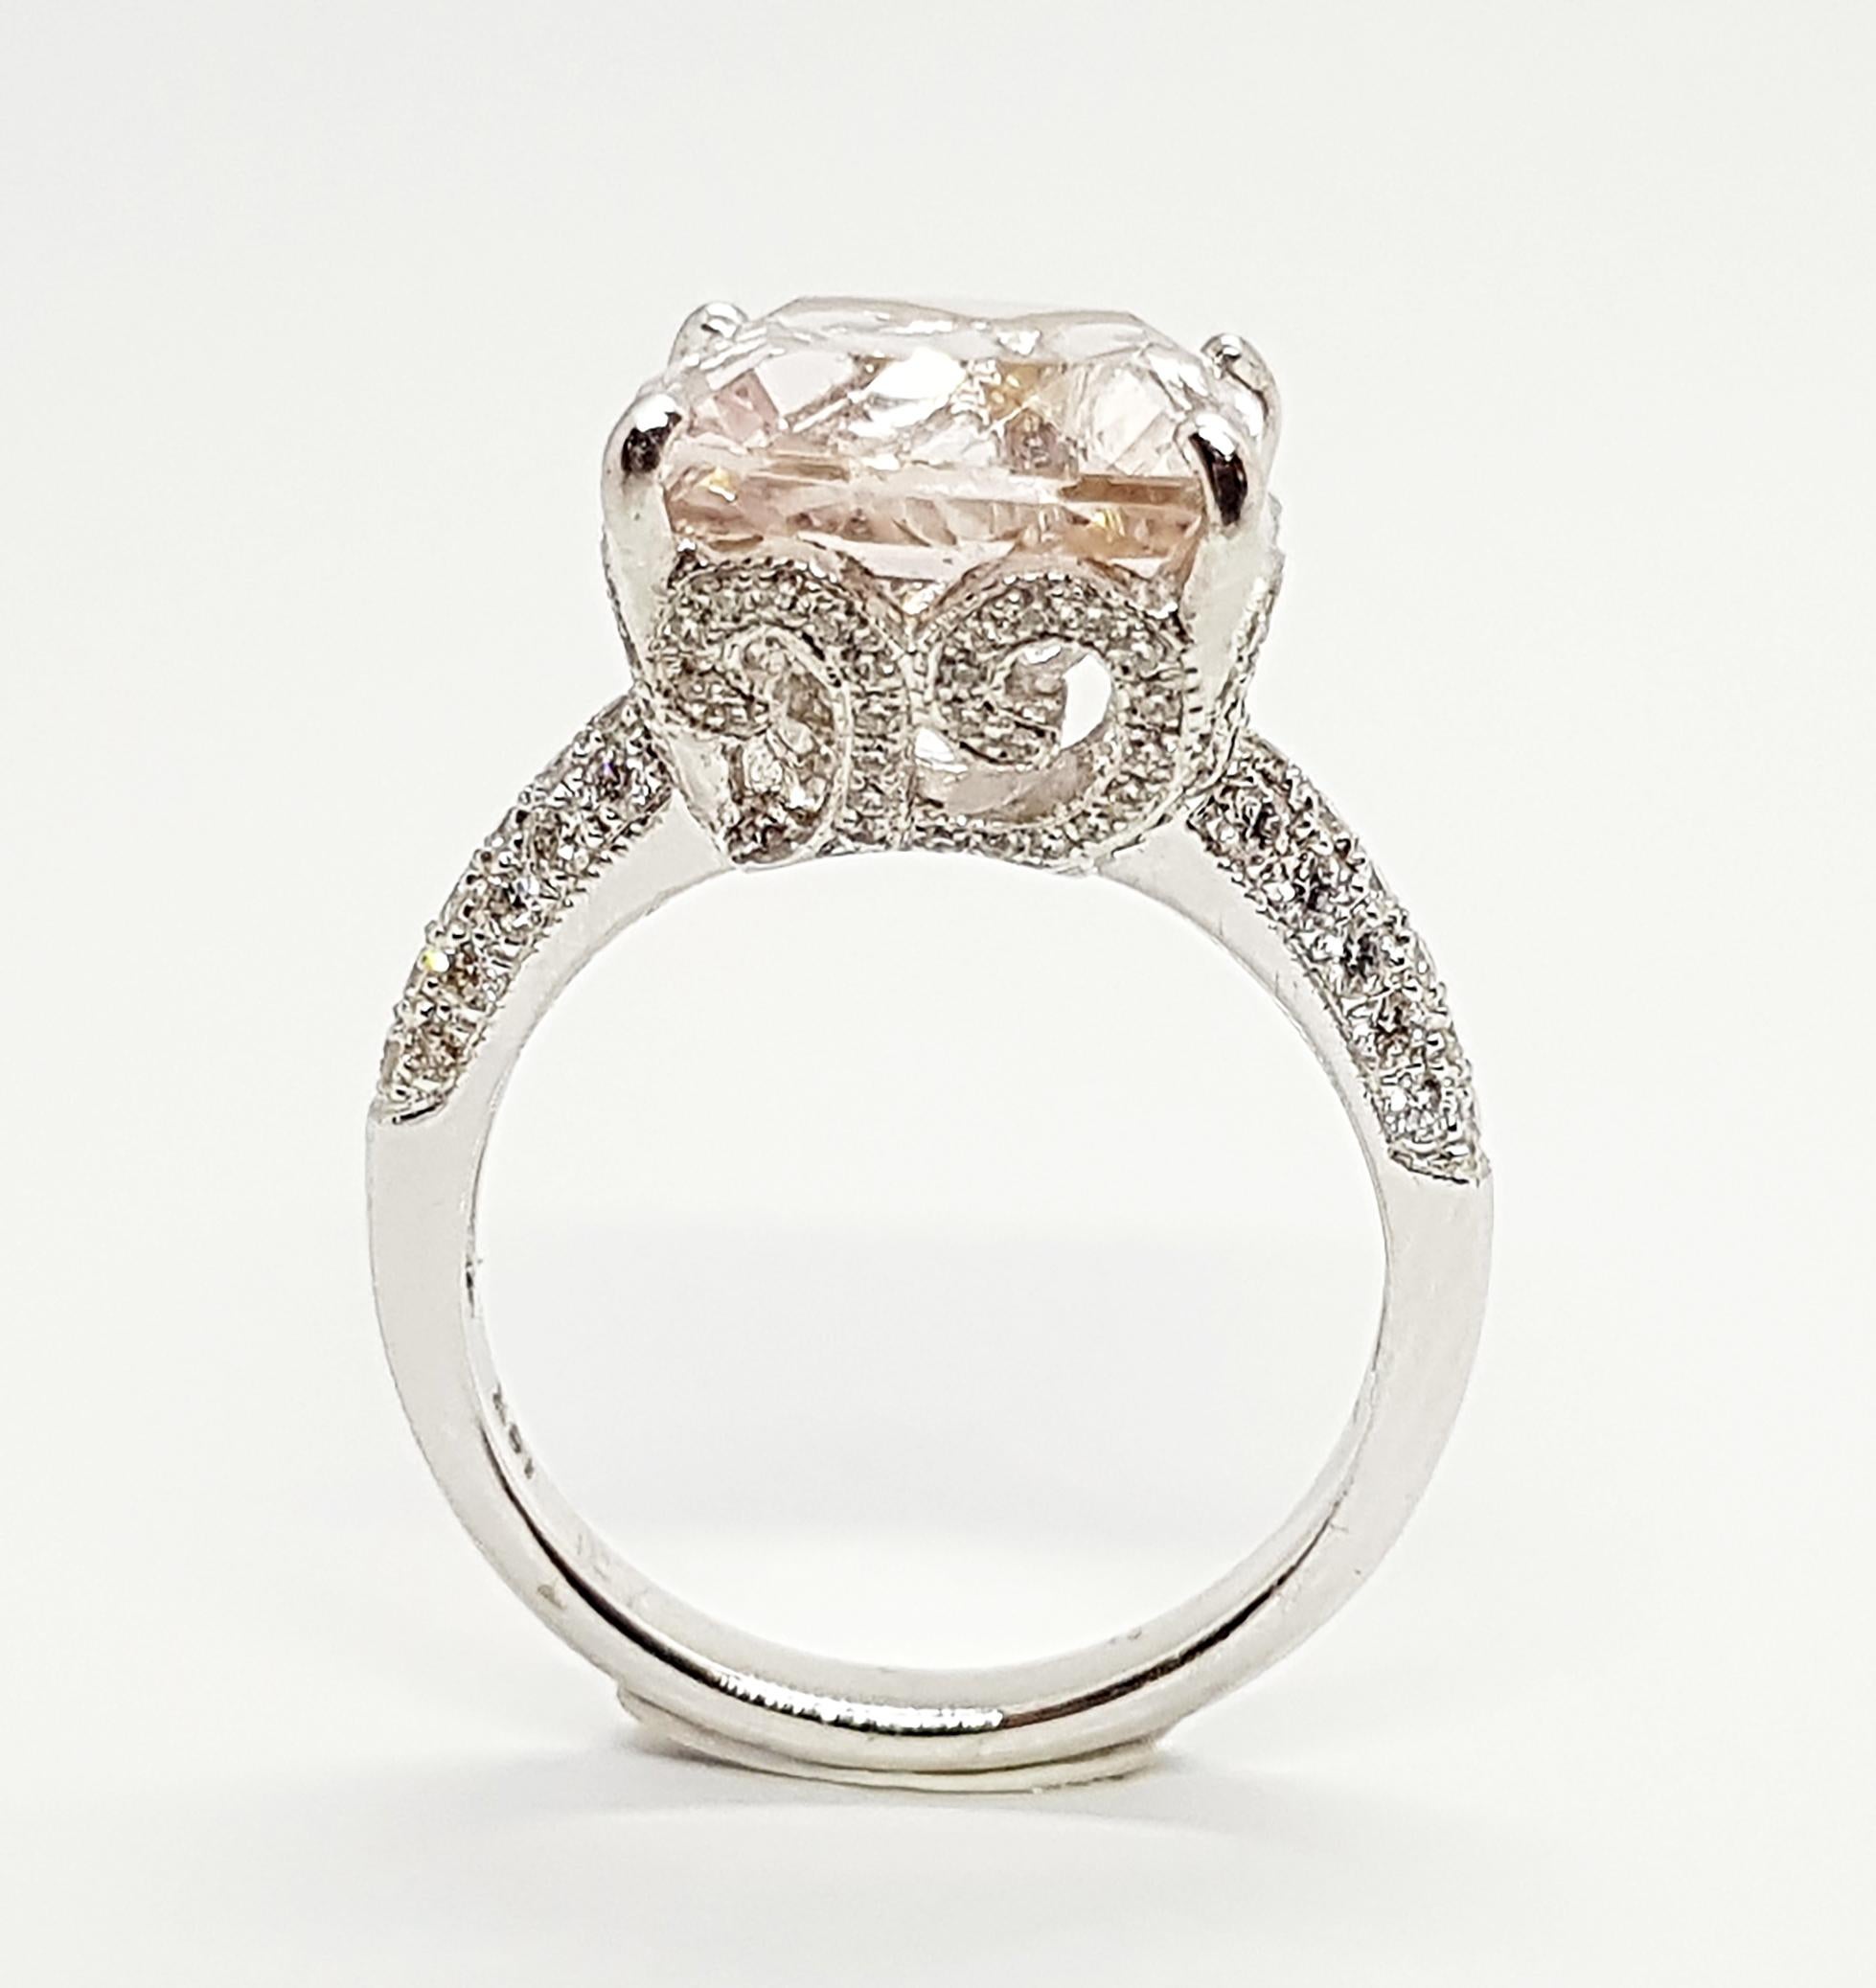 Morganite 5.61 carats with Diamond 0.53 carat Ring set in 18 Karat White Gold Settings

Width:  1.1 cm 
Length: 1.1 cm
Ring Size: 53
Total Weight: 6.27 grams

